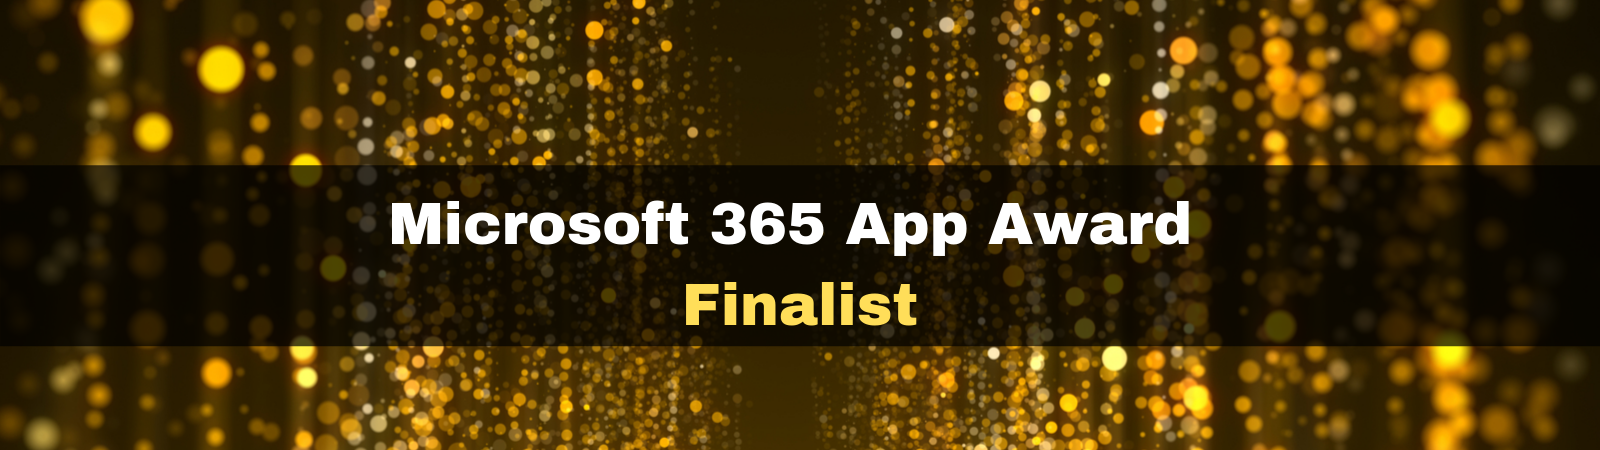 Microsoft 365 App Award - Finalist!